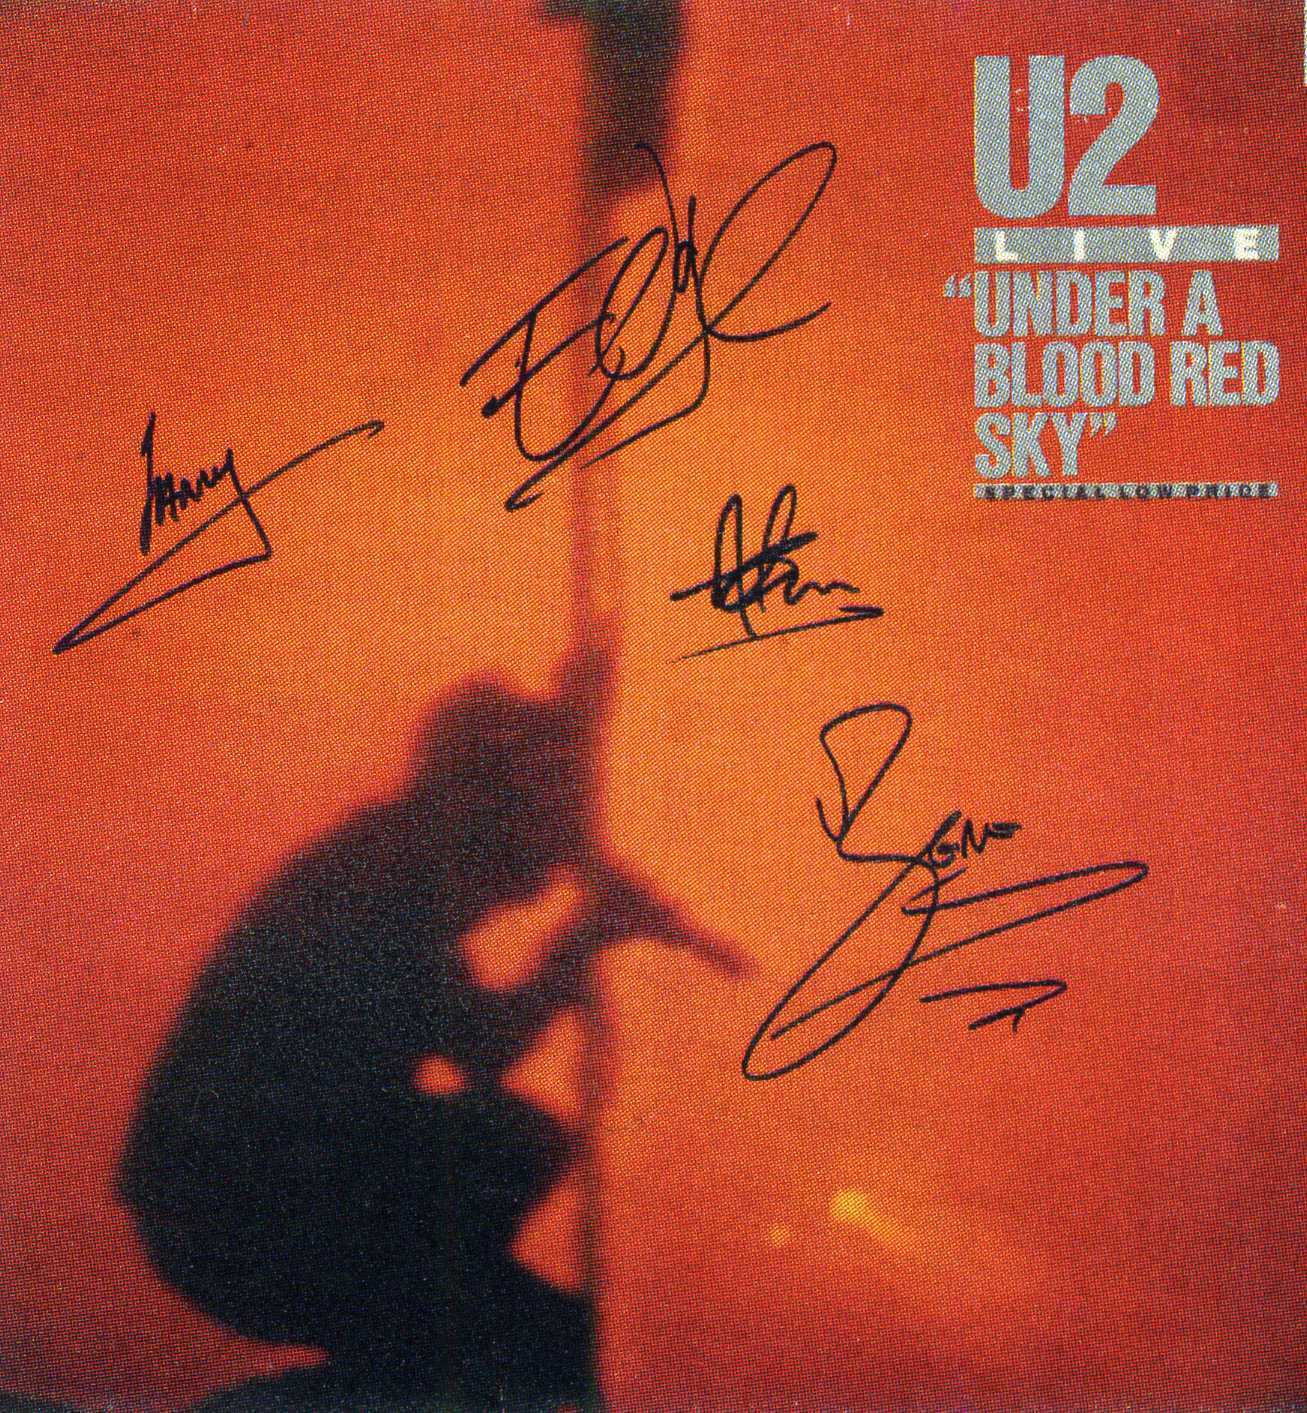 U2 Signed 'Red Sky' Photo Poster paintinggraph - Rock Band / Bono / Edge / Larry / Adam preprint